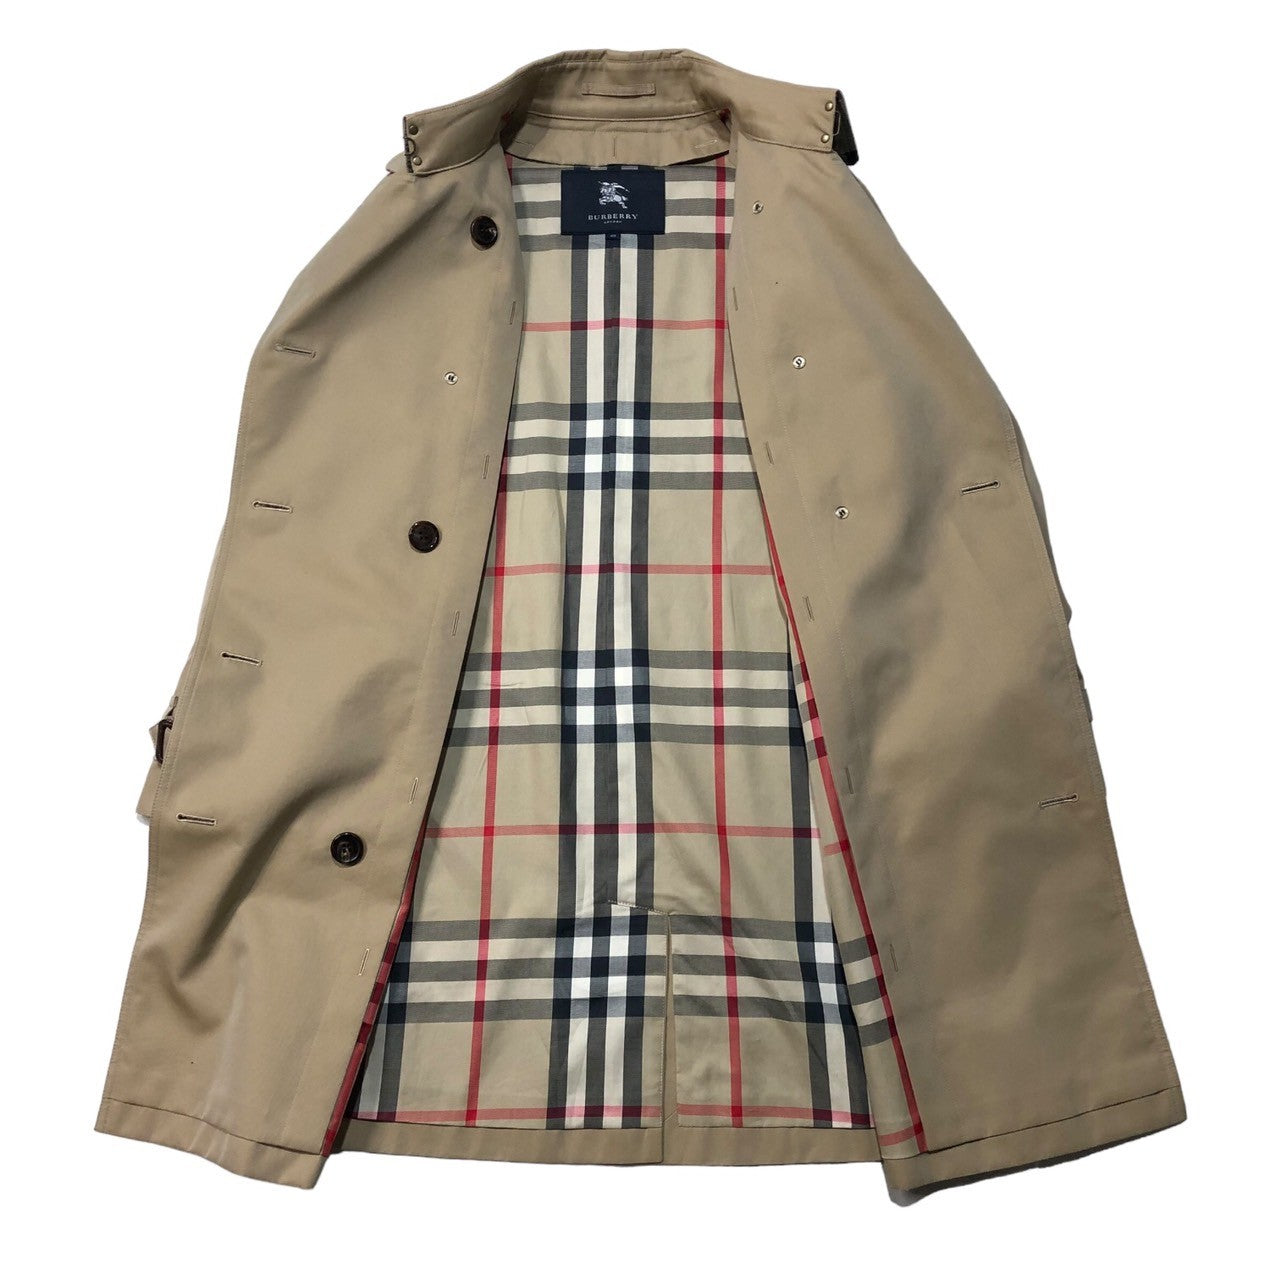 BURBERRY LONDON(バーバリーロンドン) trench coat with liner ライナー付 トレンチコート B1A59-430-51 38(M) ベージュ